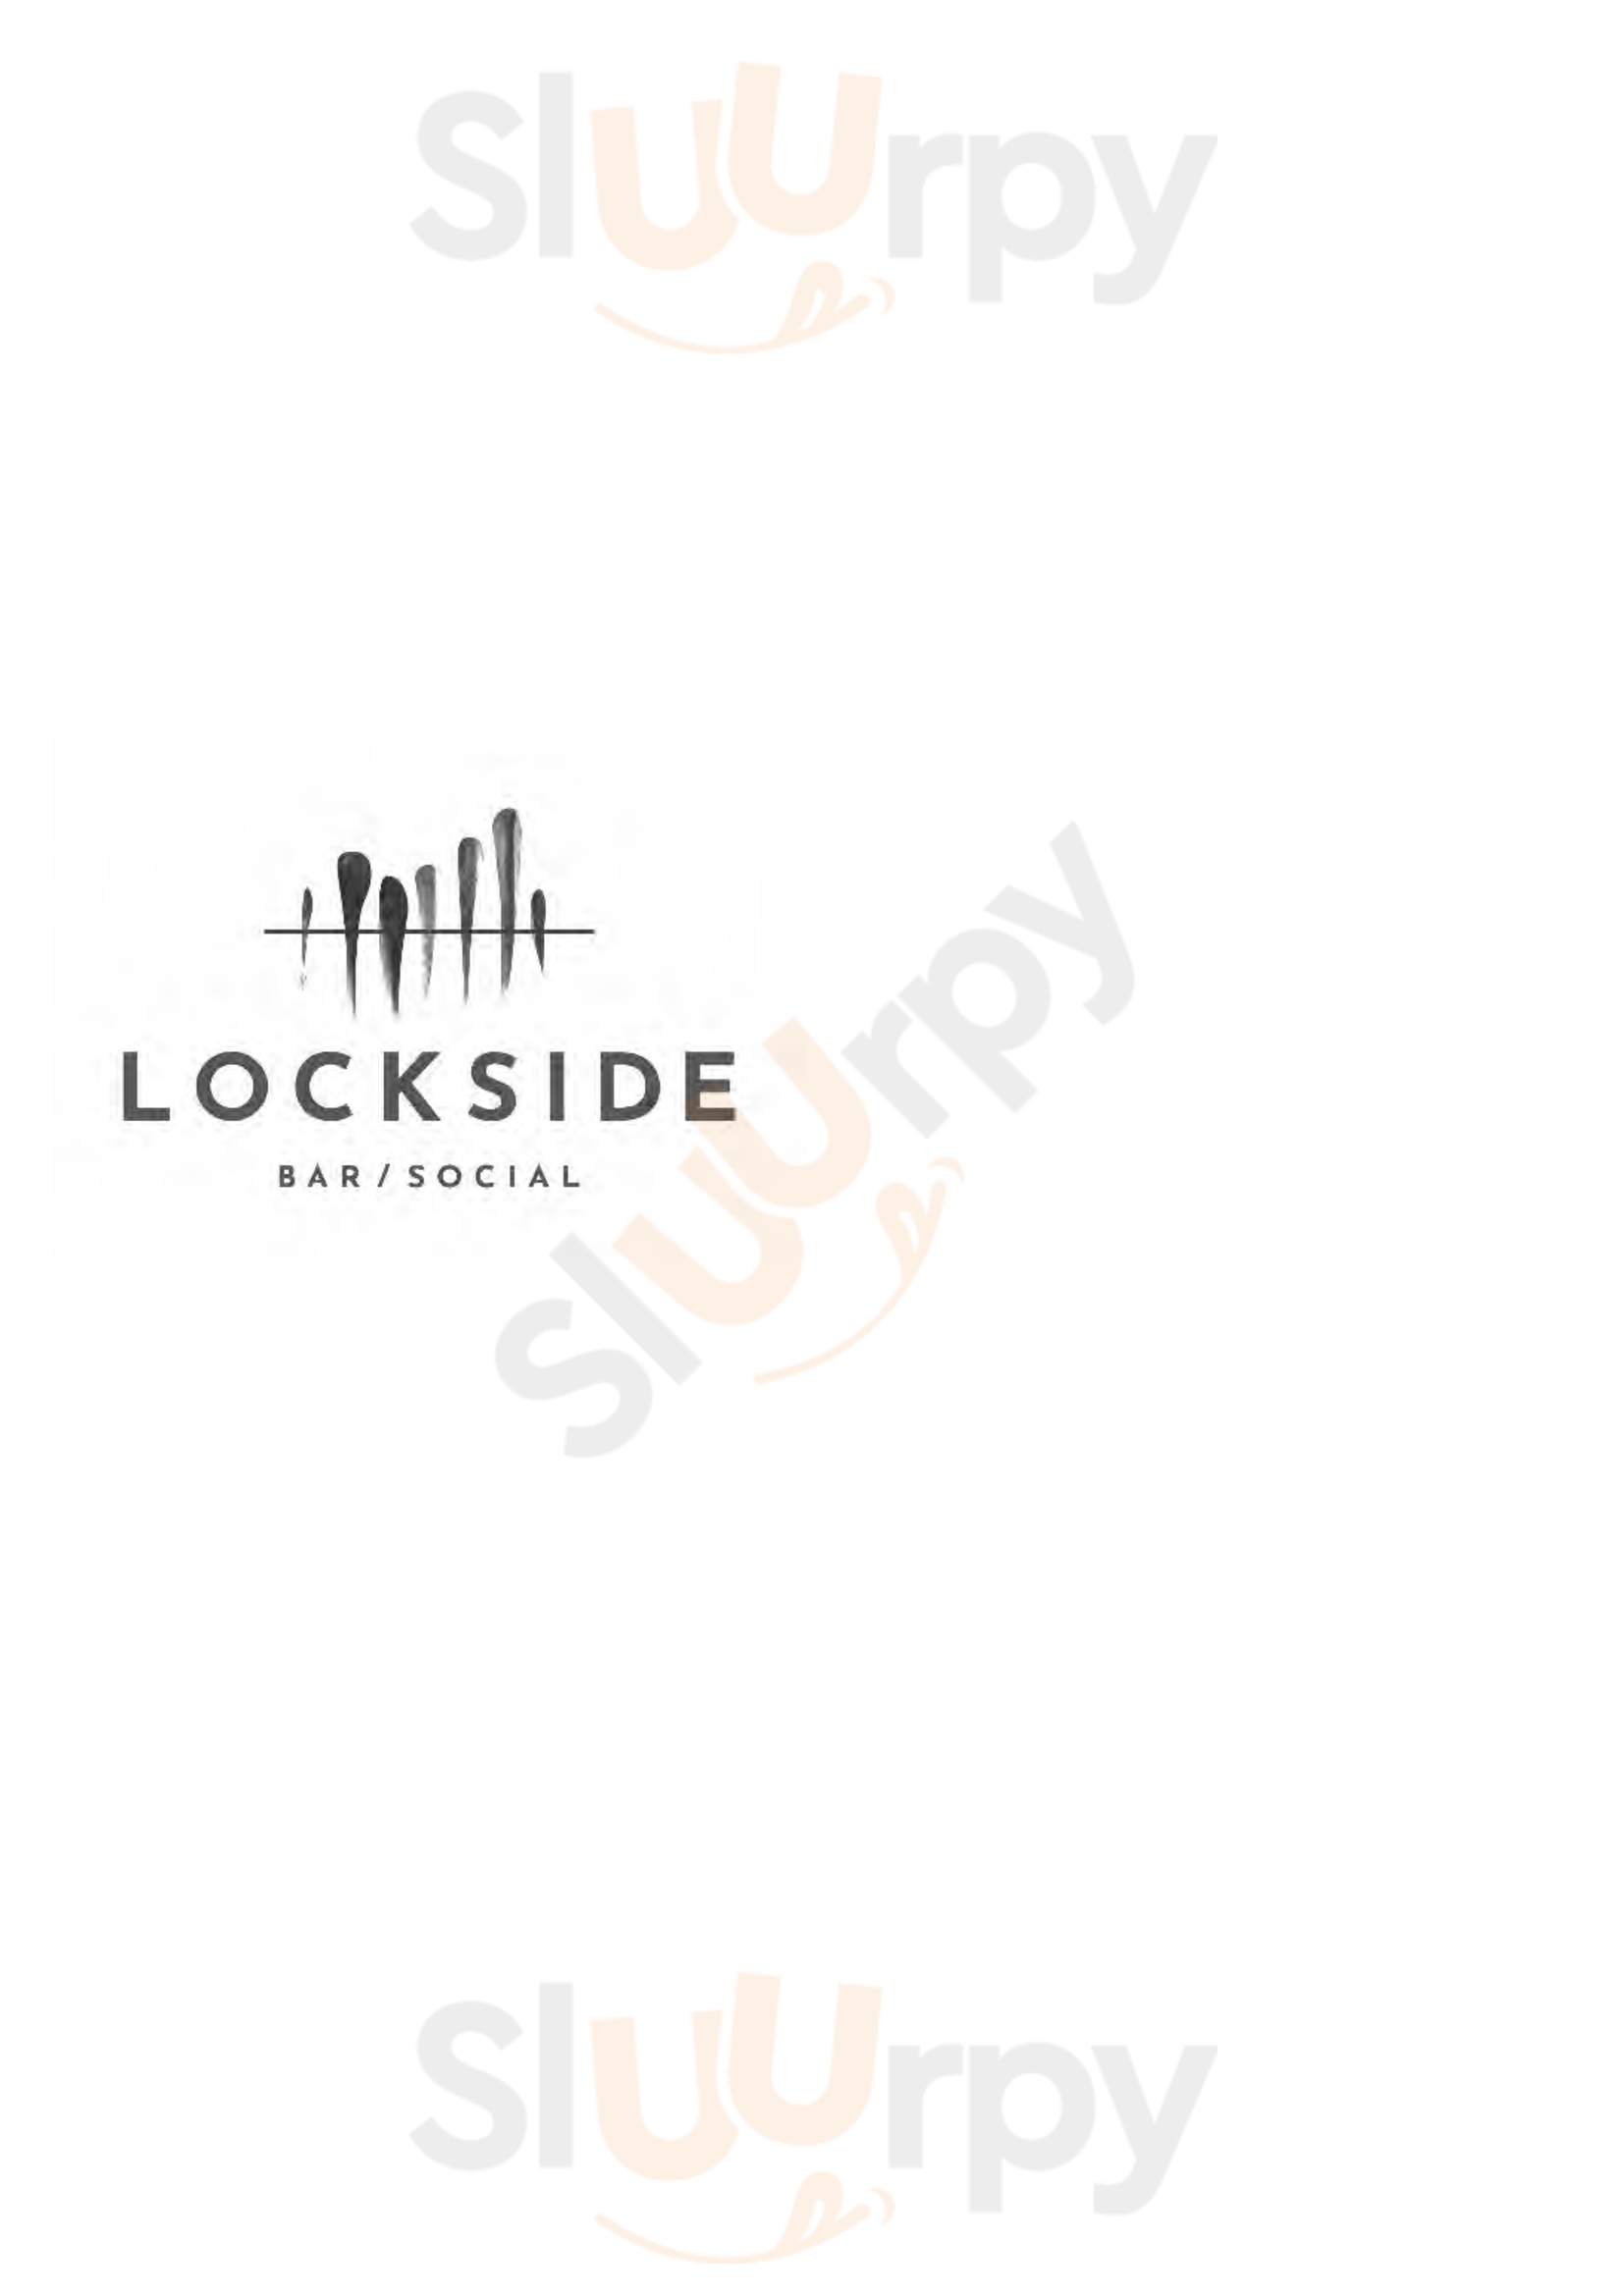 Lockside Bar/social Dublin Menu - 1